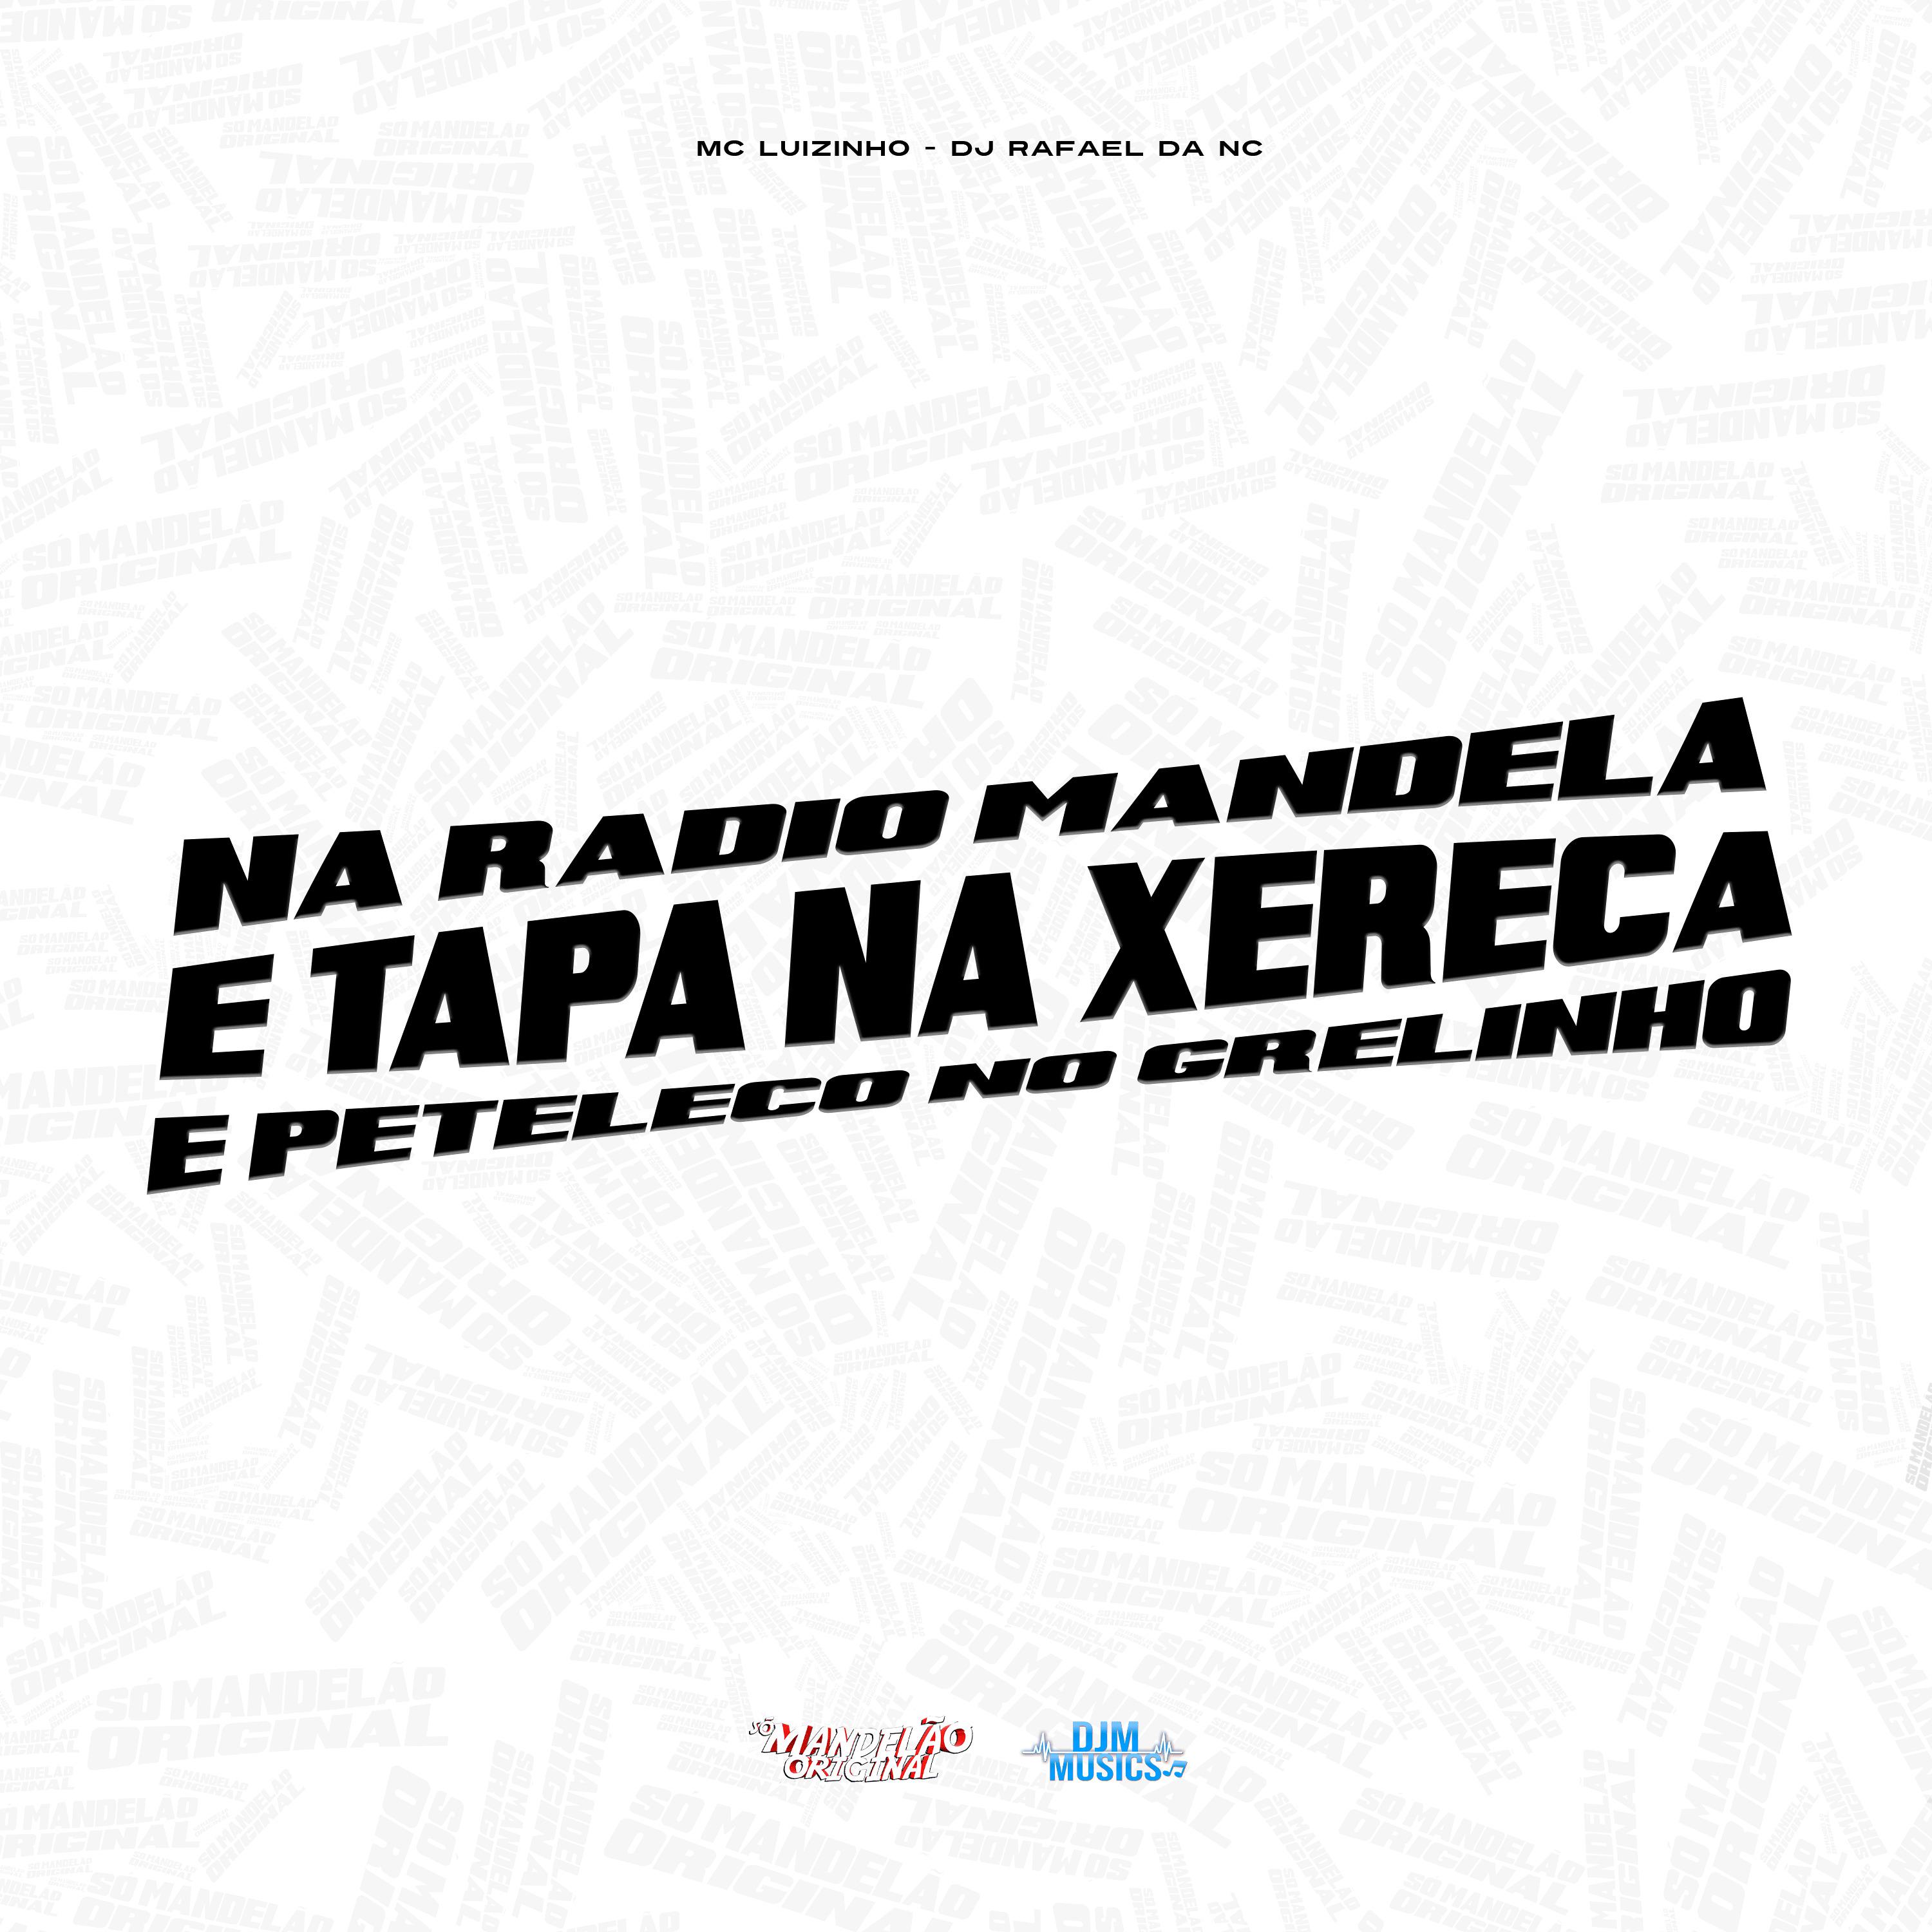 Постер альбома Na Radio Mandela e Tapa na Xereca e Peteleco no Grelinho